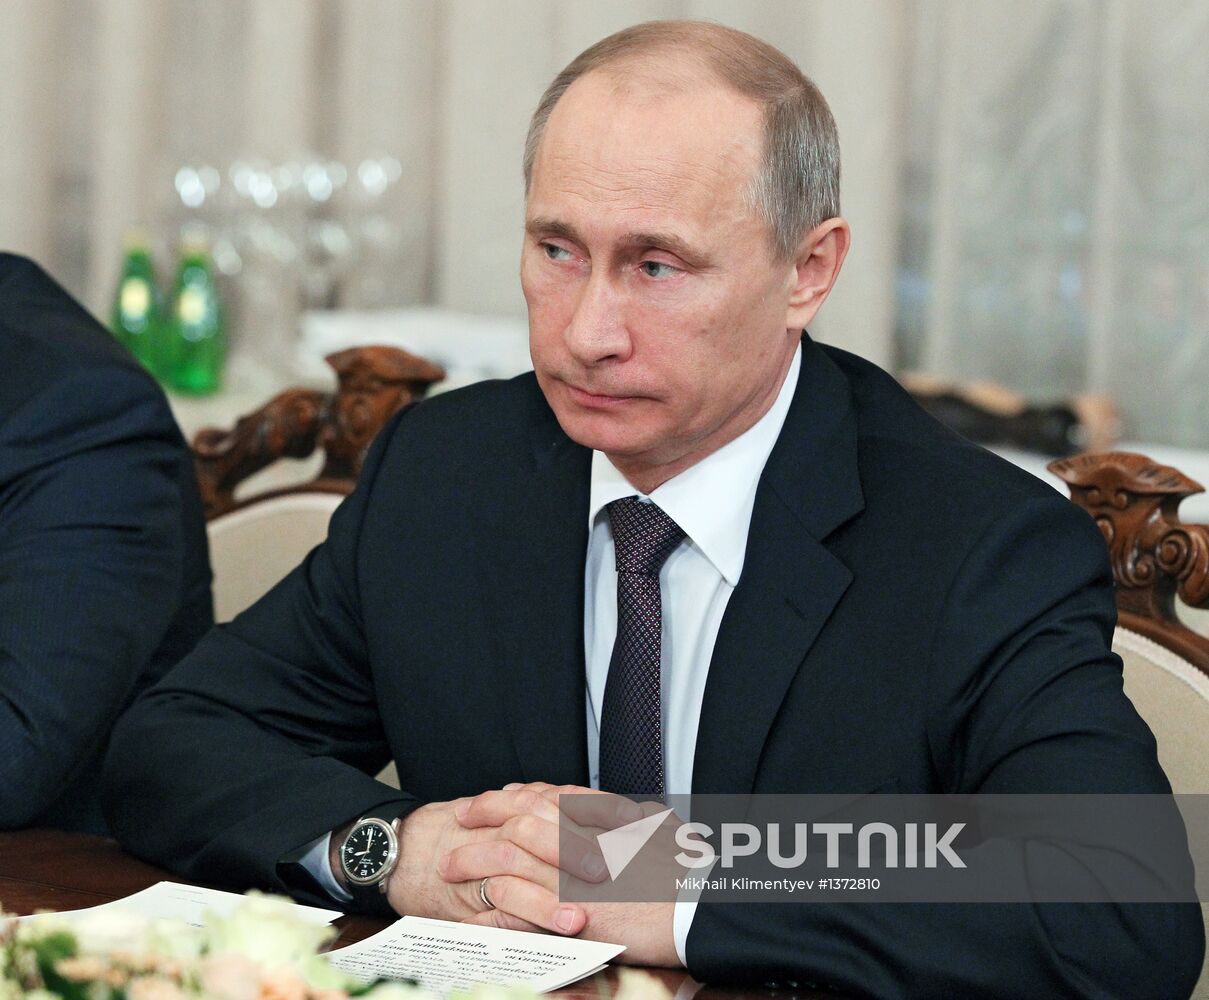 Russian President Putin meets with Niinistö in Novo-Ogaryovo